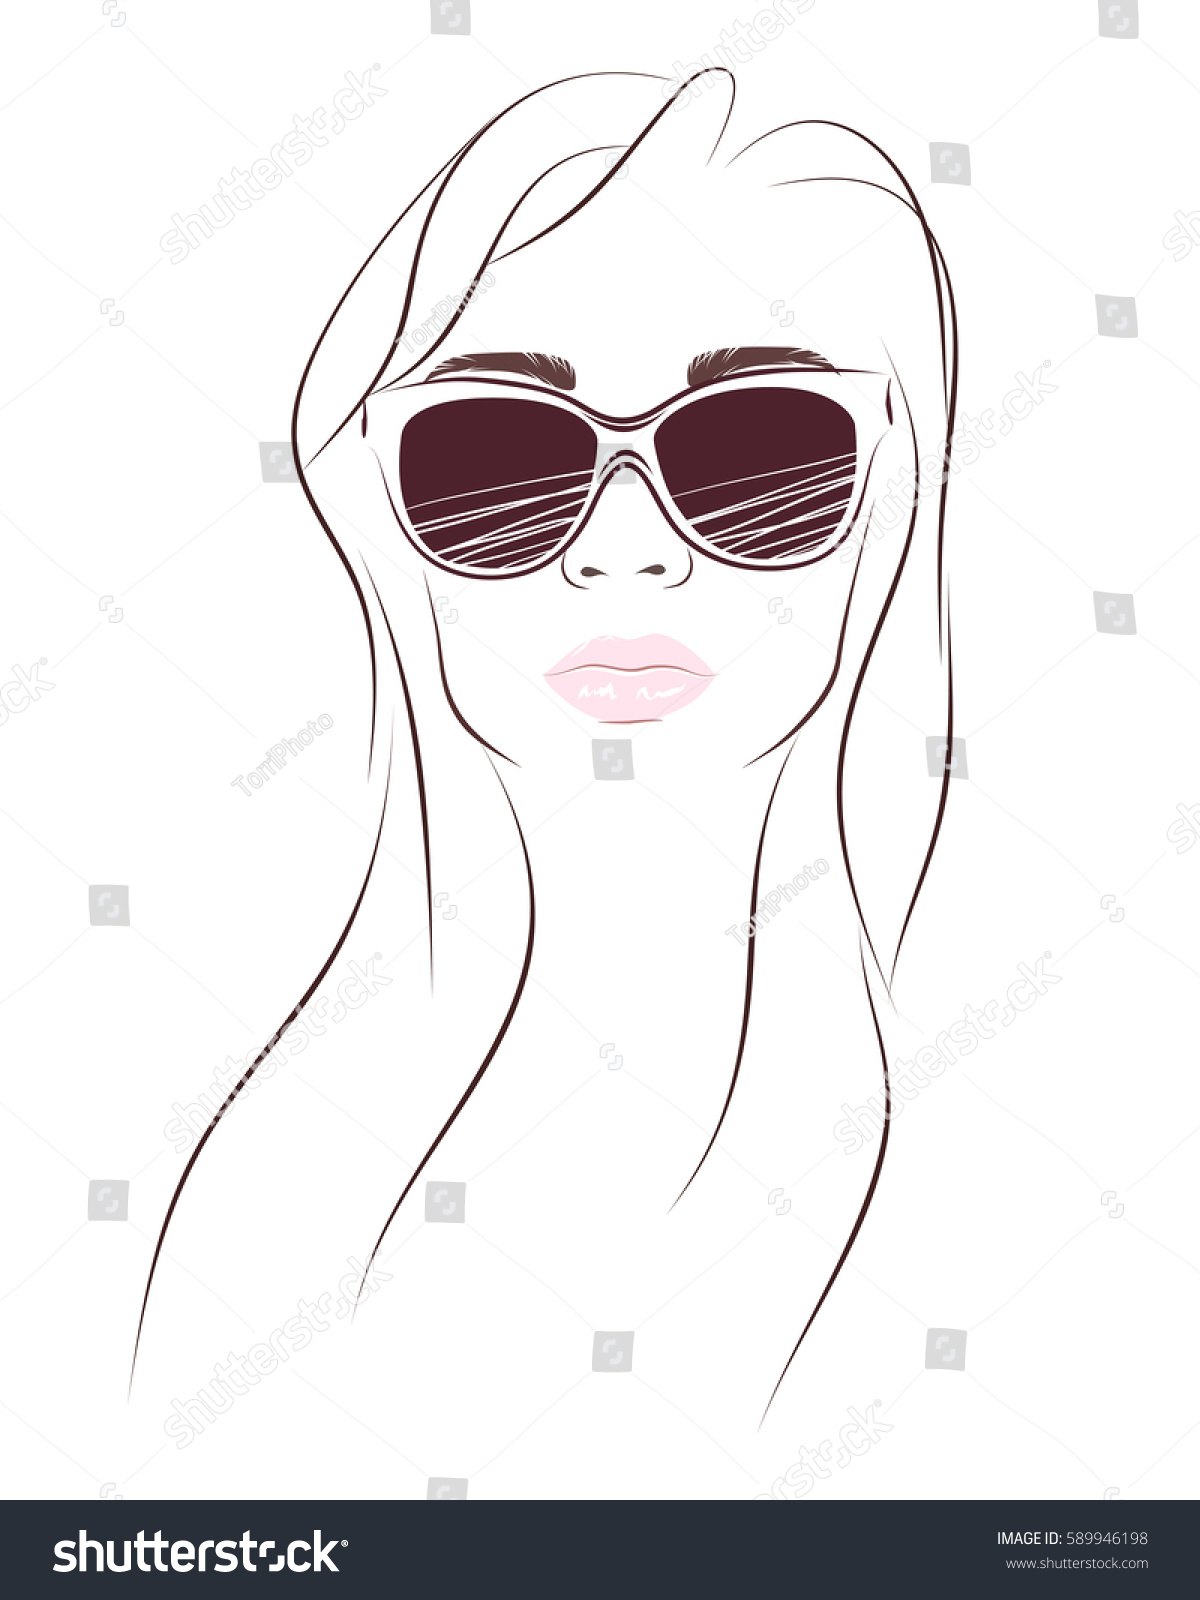 https://www.shutterstock.com/image-vector/simply-fashion-portrait-woman-sunglasses-589946198